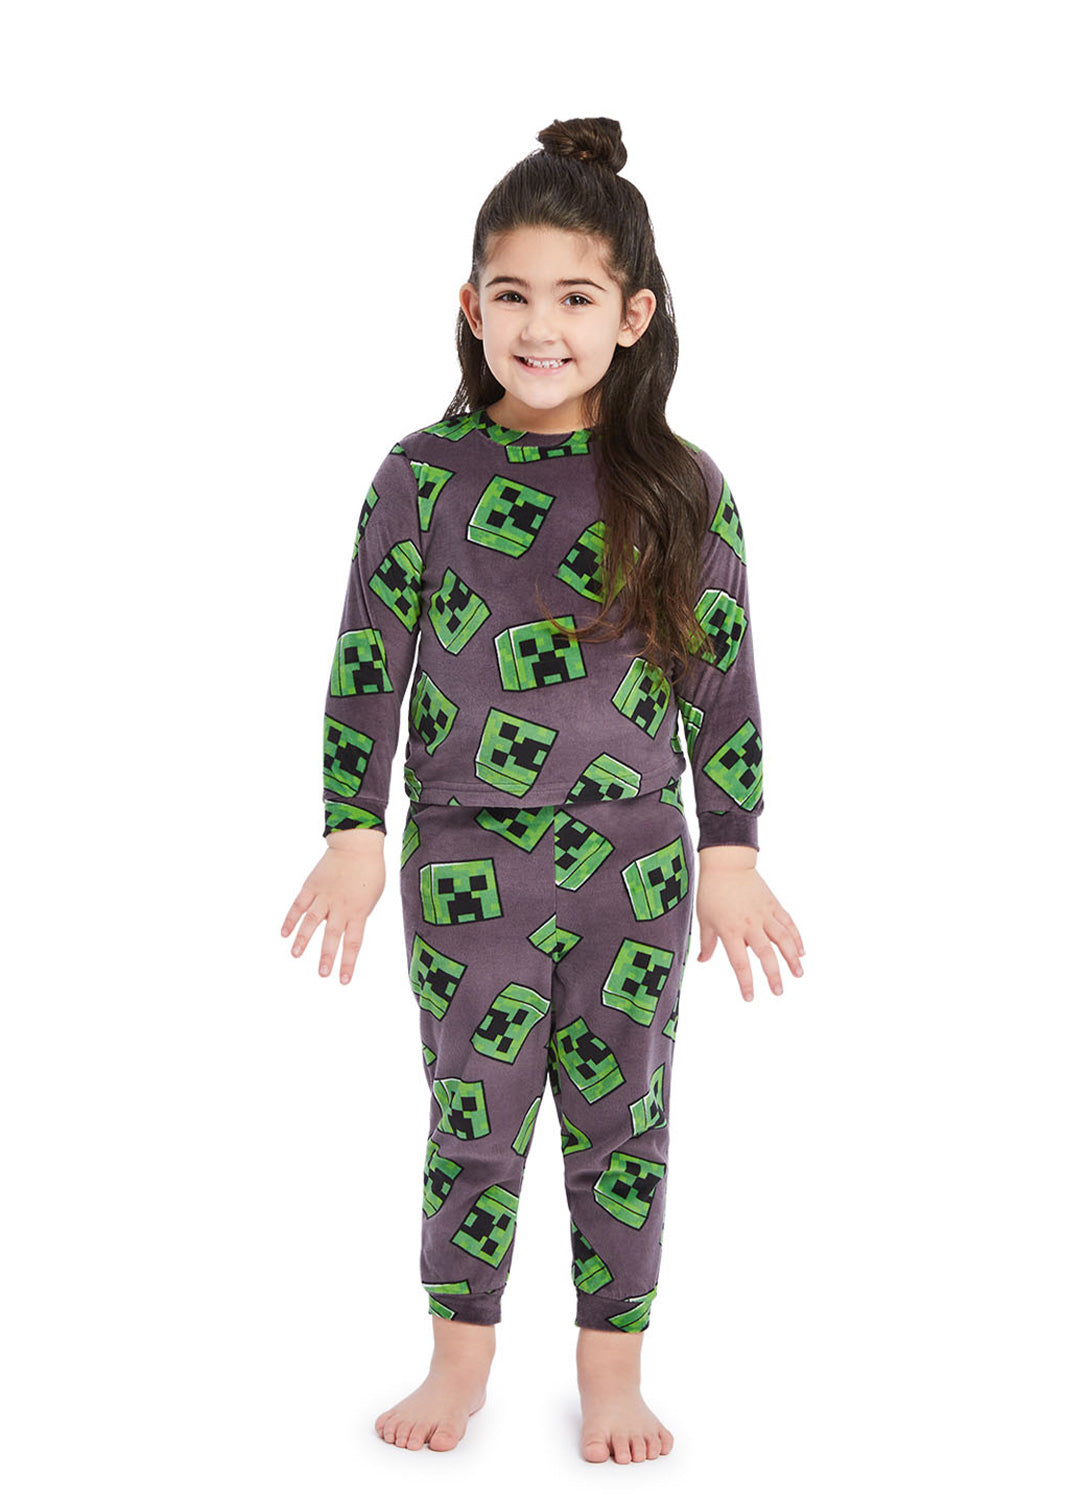 Little Girl wearing Minecraft PJ set 2 pieces, long sleeve shirt and pants (gray & green)